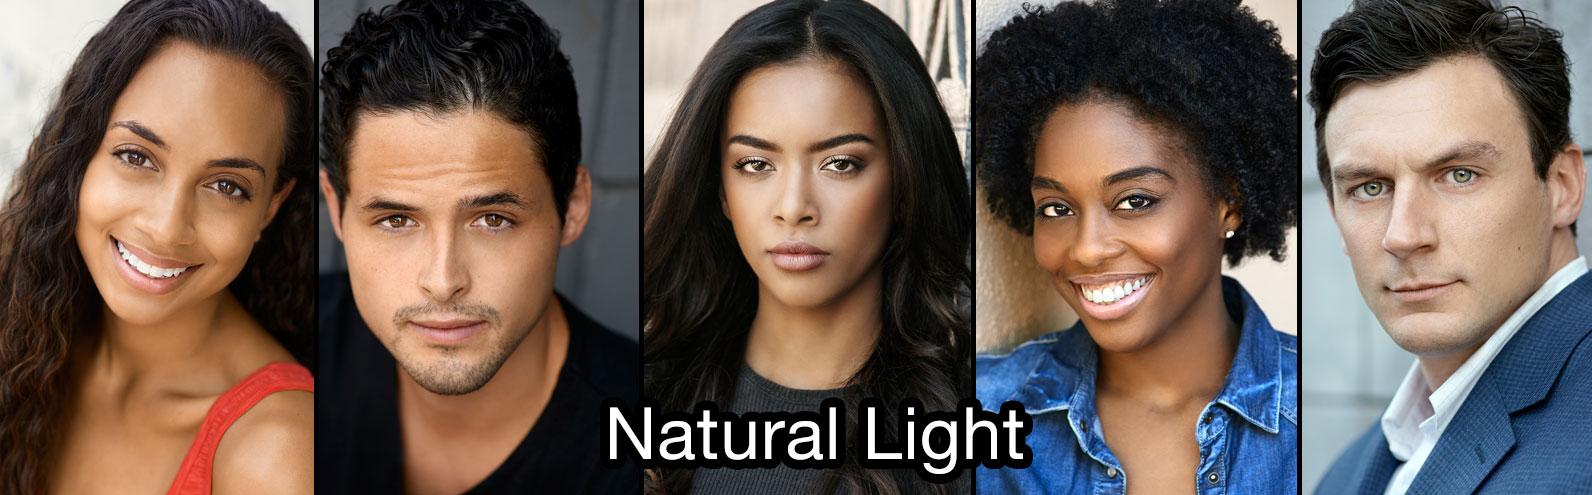 Sample of Natural Light Actor Headshots